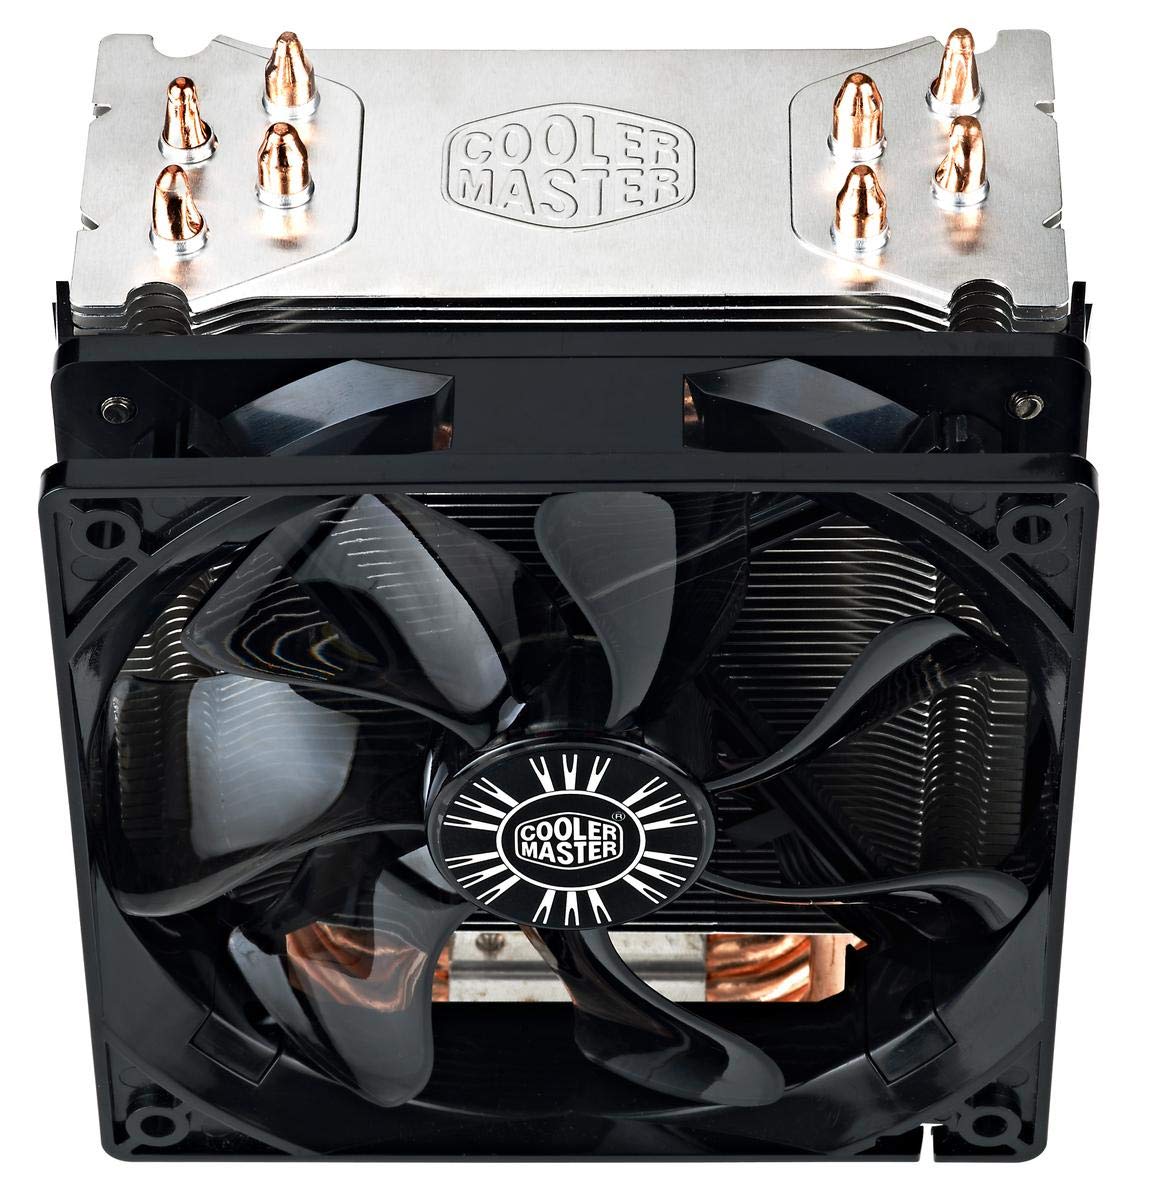 Cooler Master Hyper 212 Evo CPU Cooler (RR-212E-20PK-R2), 120mm PWM Fan, Aluminum Fins, 4 Copper Direct Contact Heat Pipes for AMD Ryzen/Intel